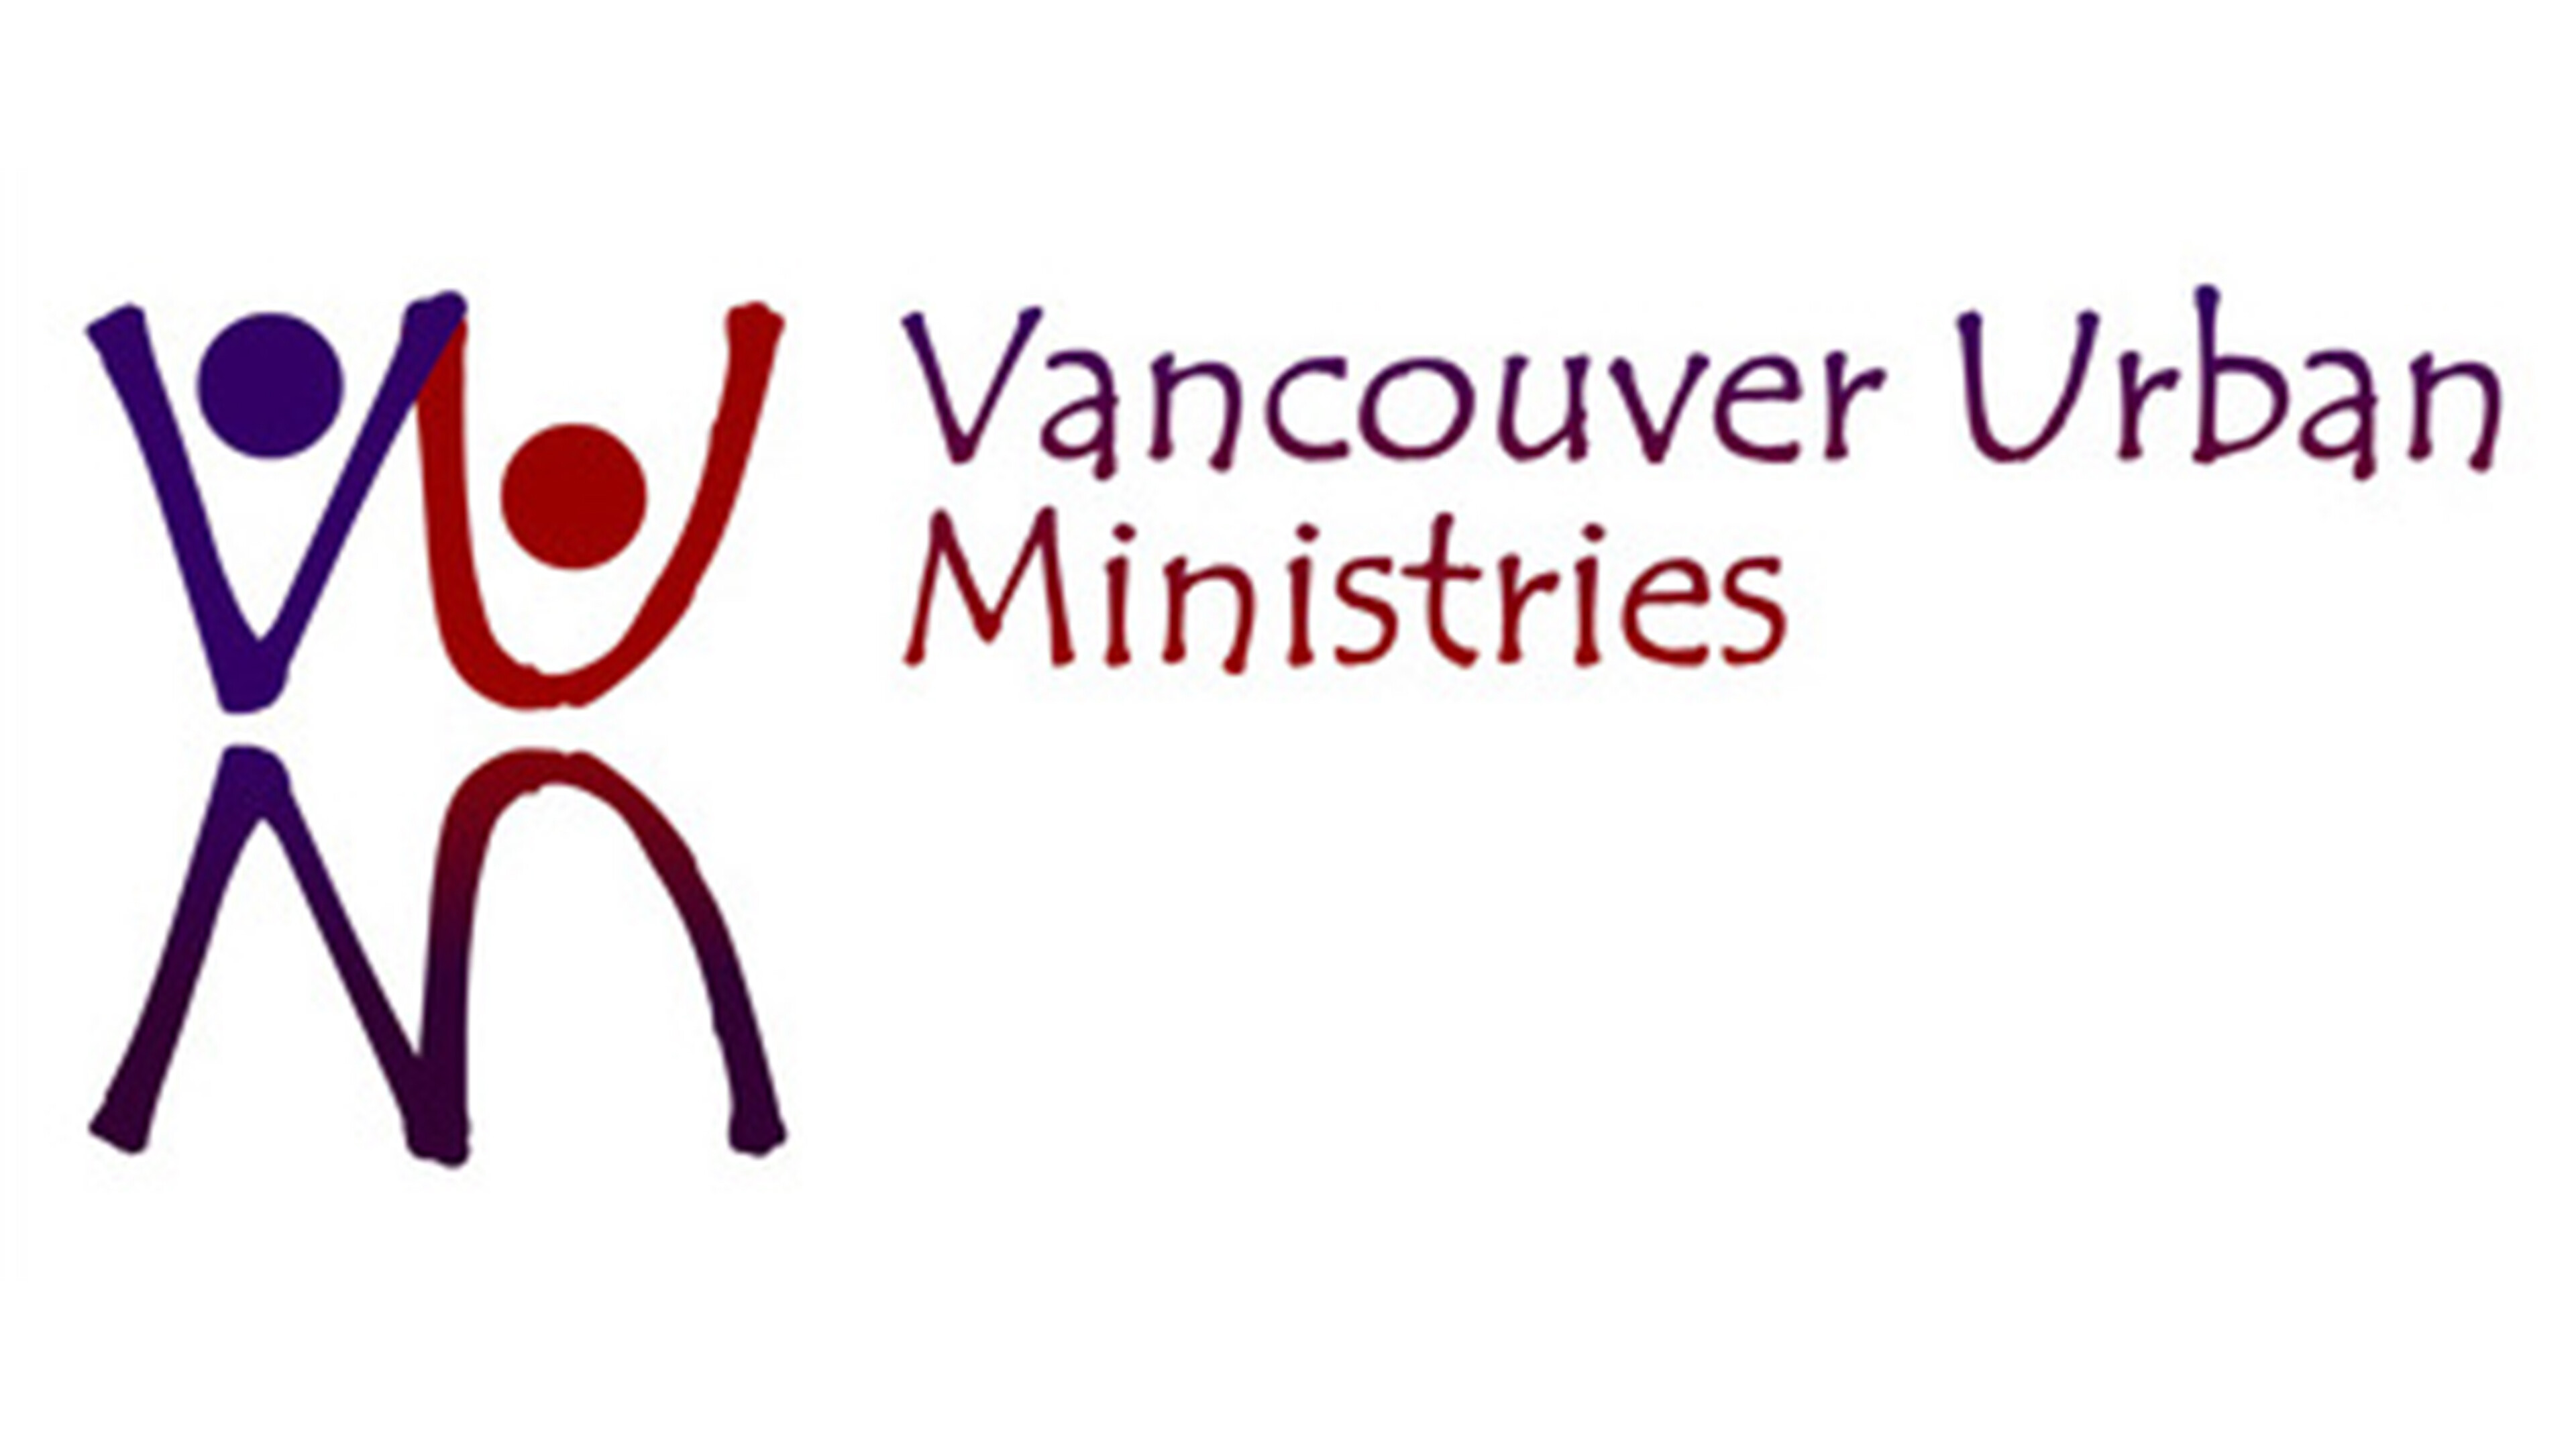 Vancouver Urban Ministries